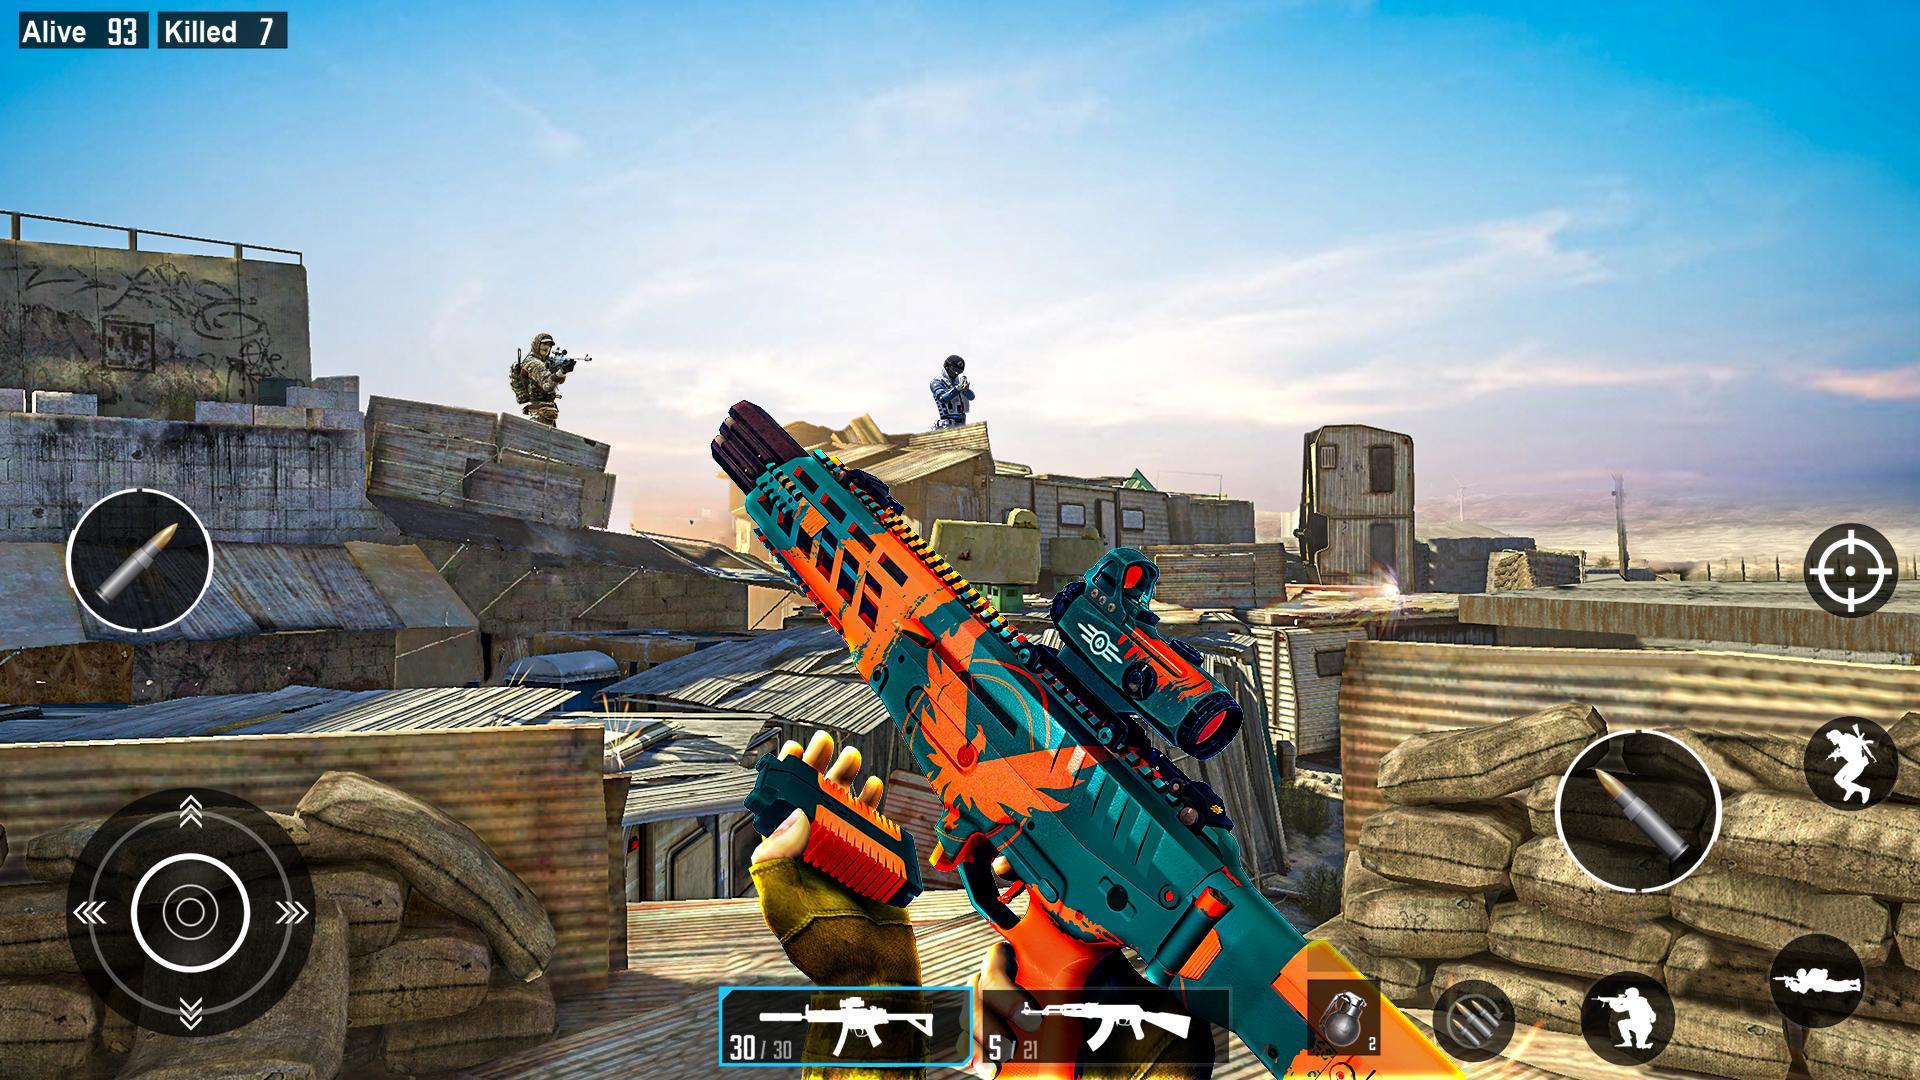 Real Commando Mission - Free Shooting Games 2020 3.5 Screenshot 8